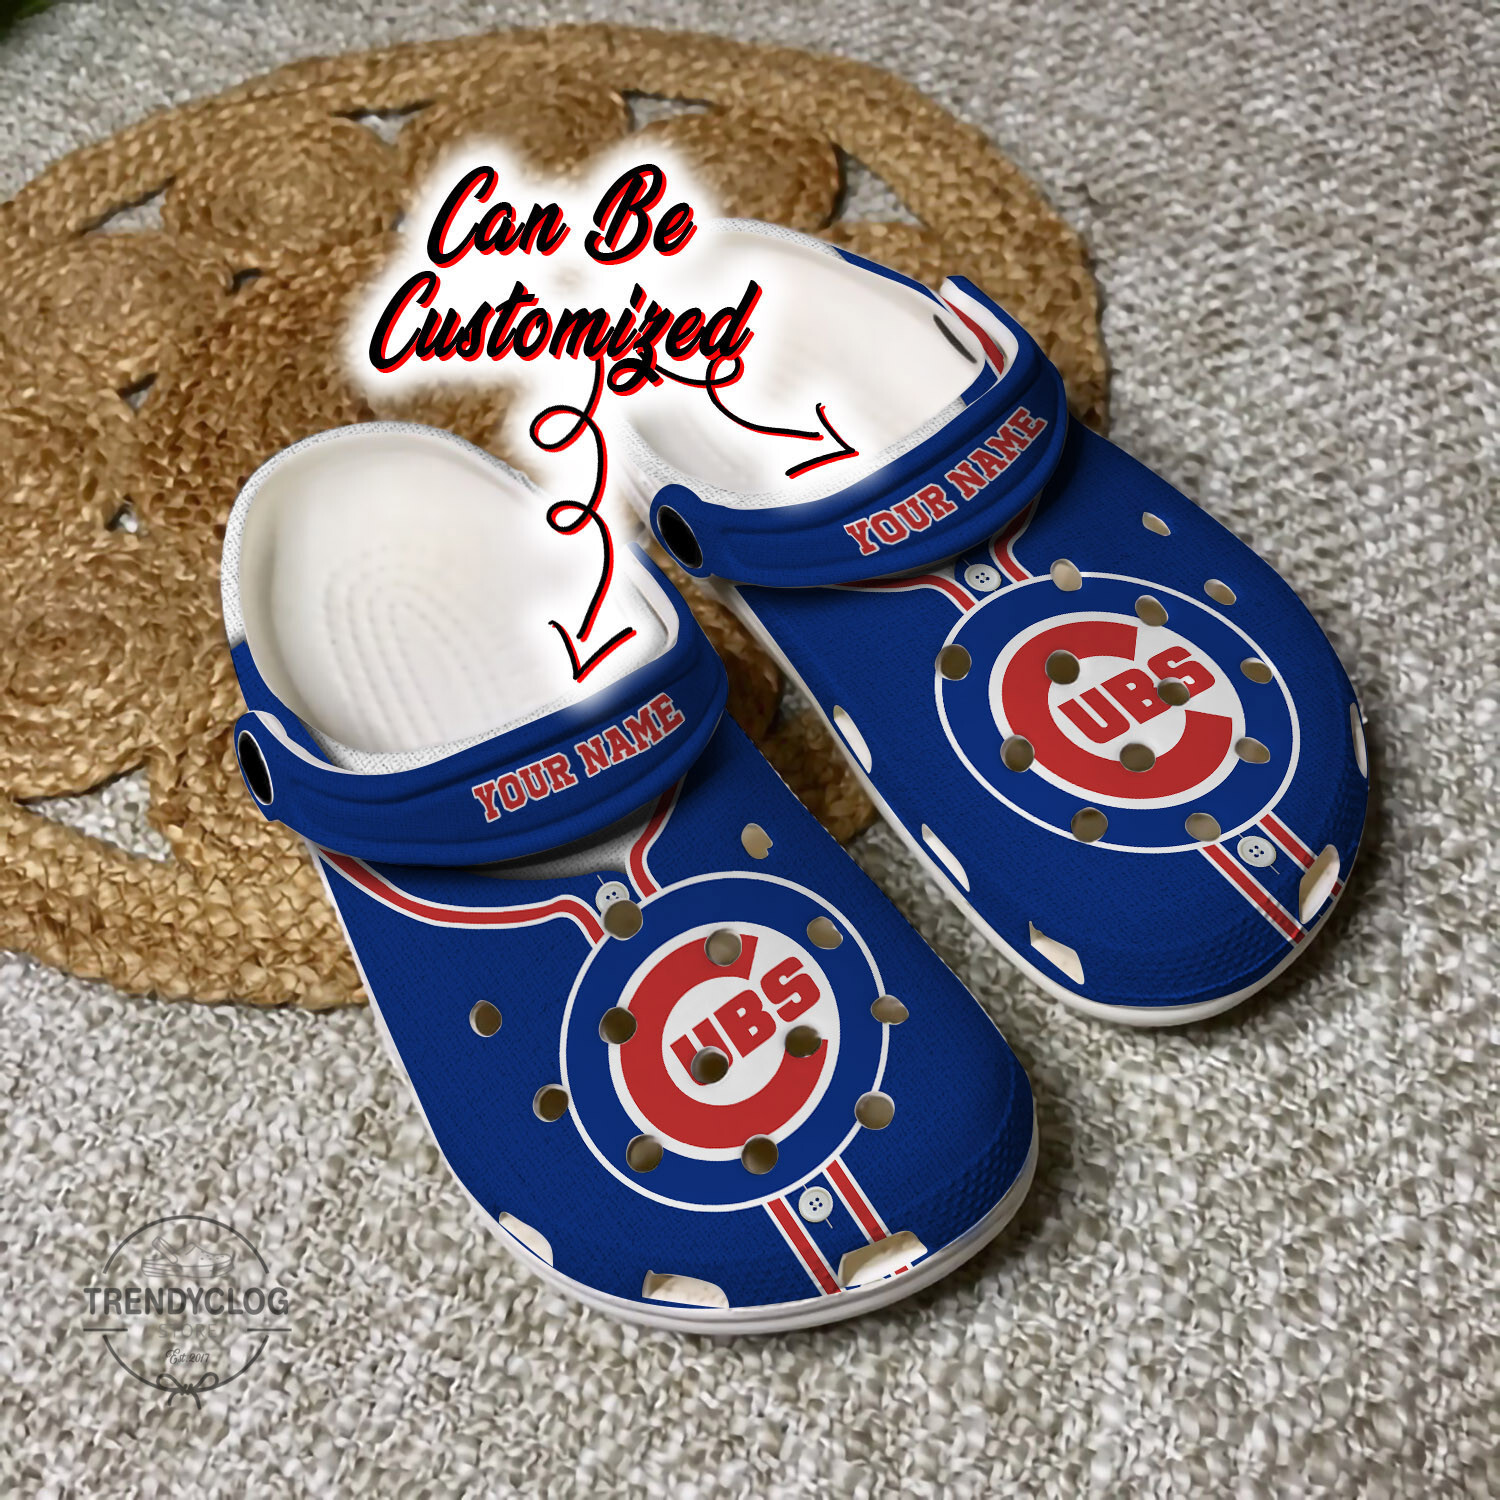 Baseball Crocs Personalized CCubs Baseball Jersey Style Clog Shoes